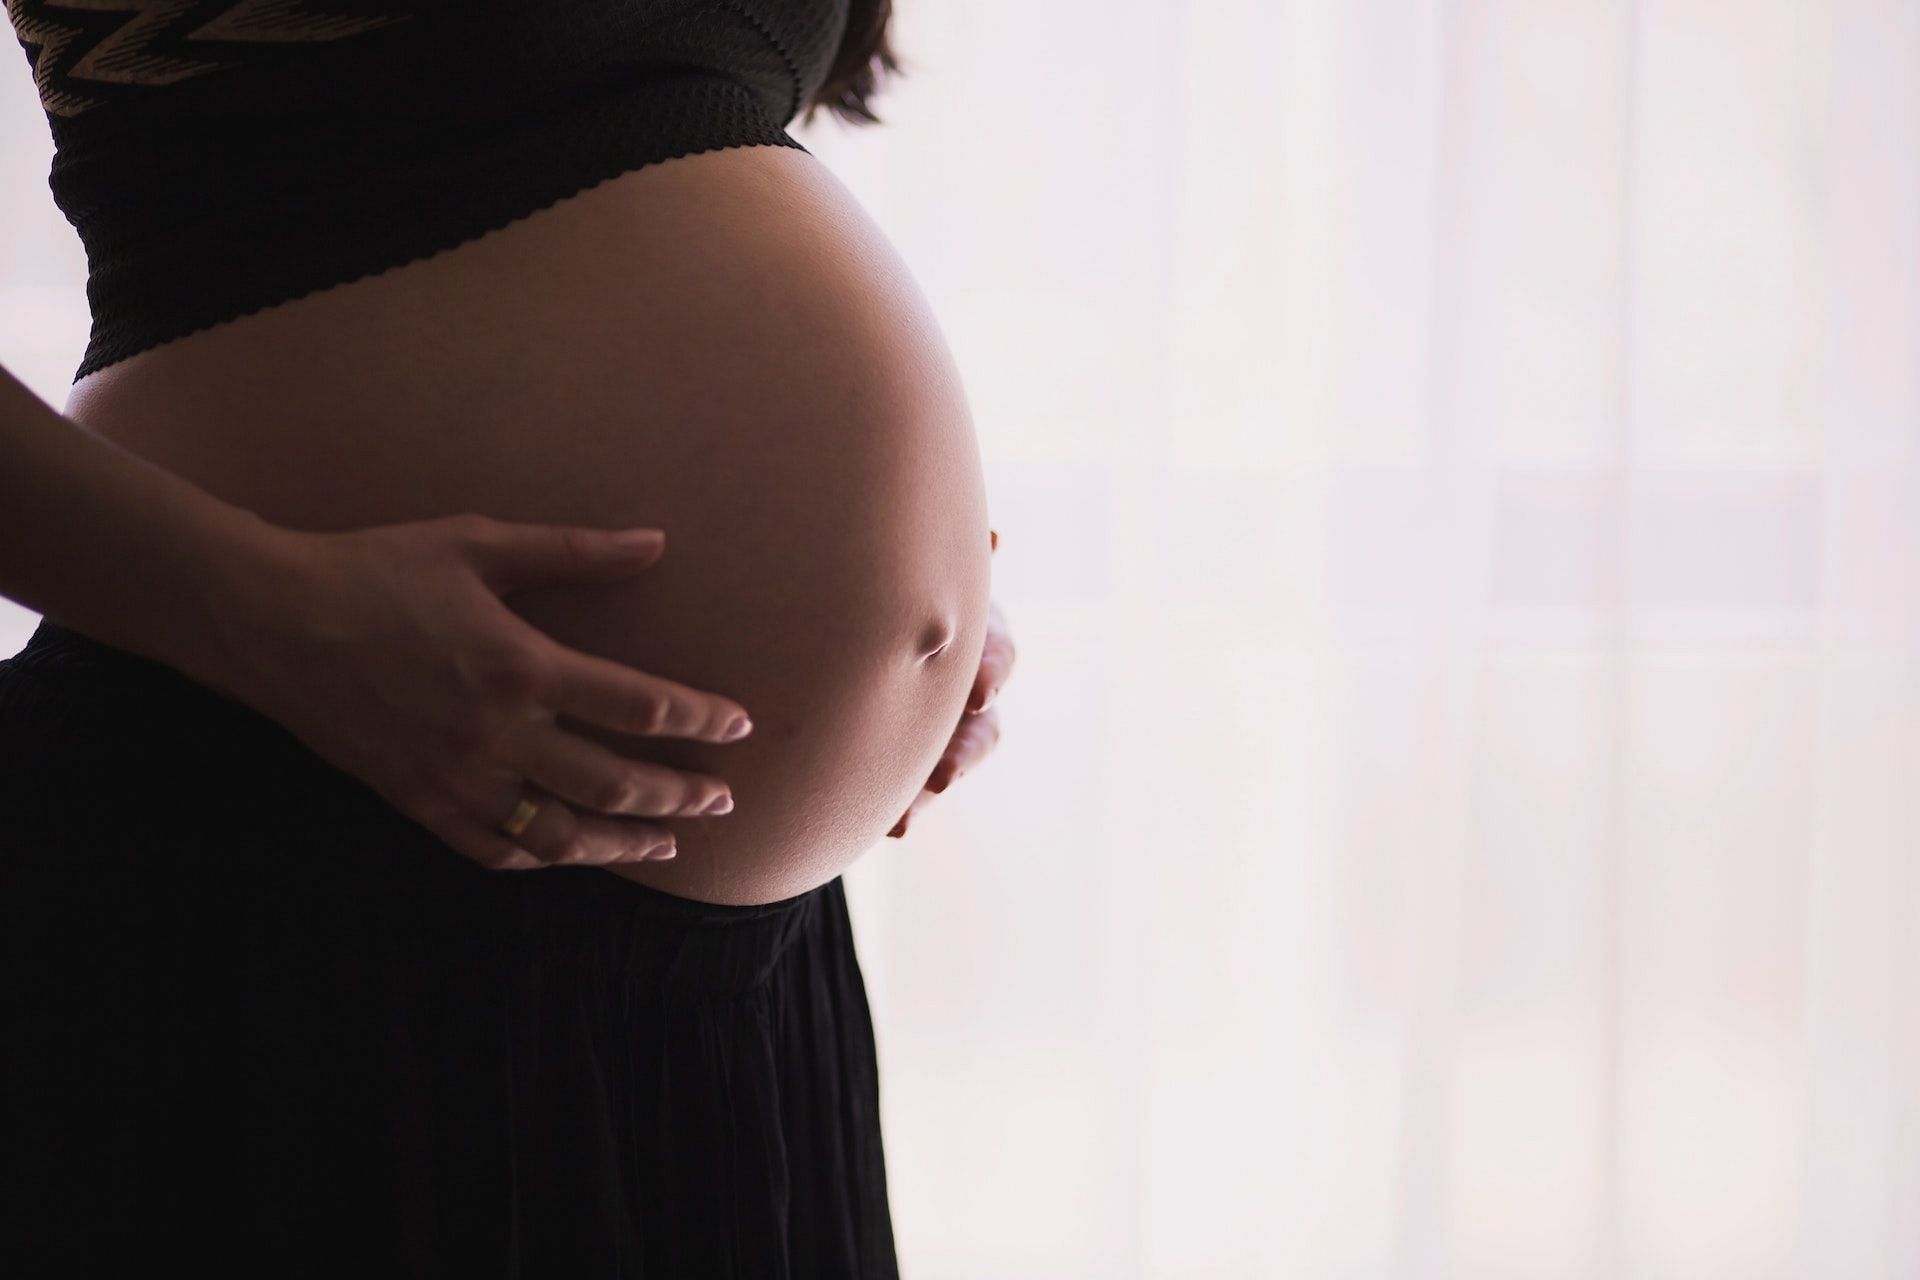 Kombucha may not be suitable for pregnant women. (Photo via Pexels/freestocks.org)